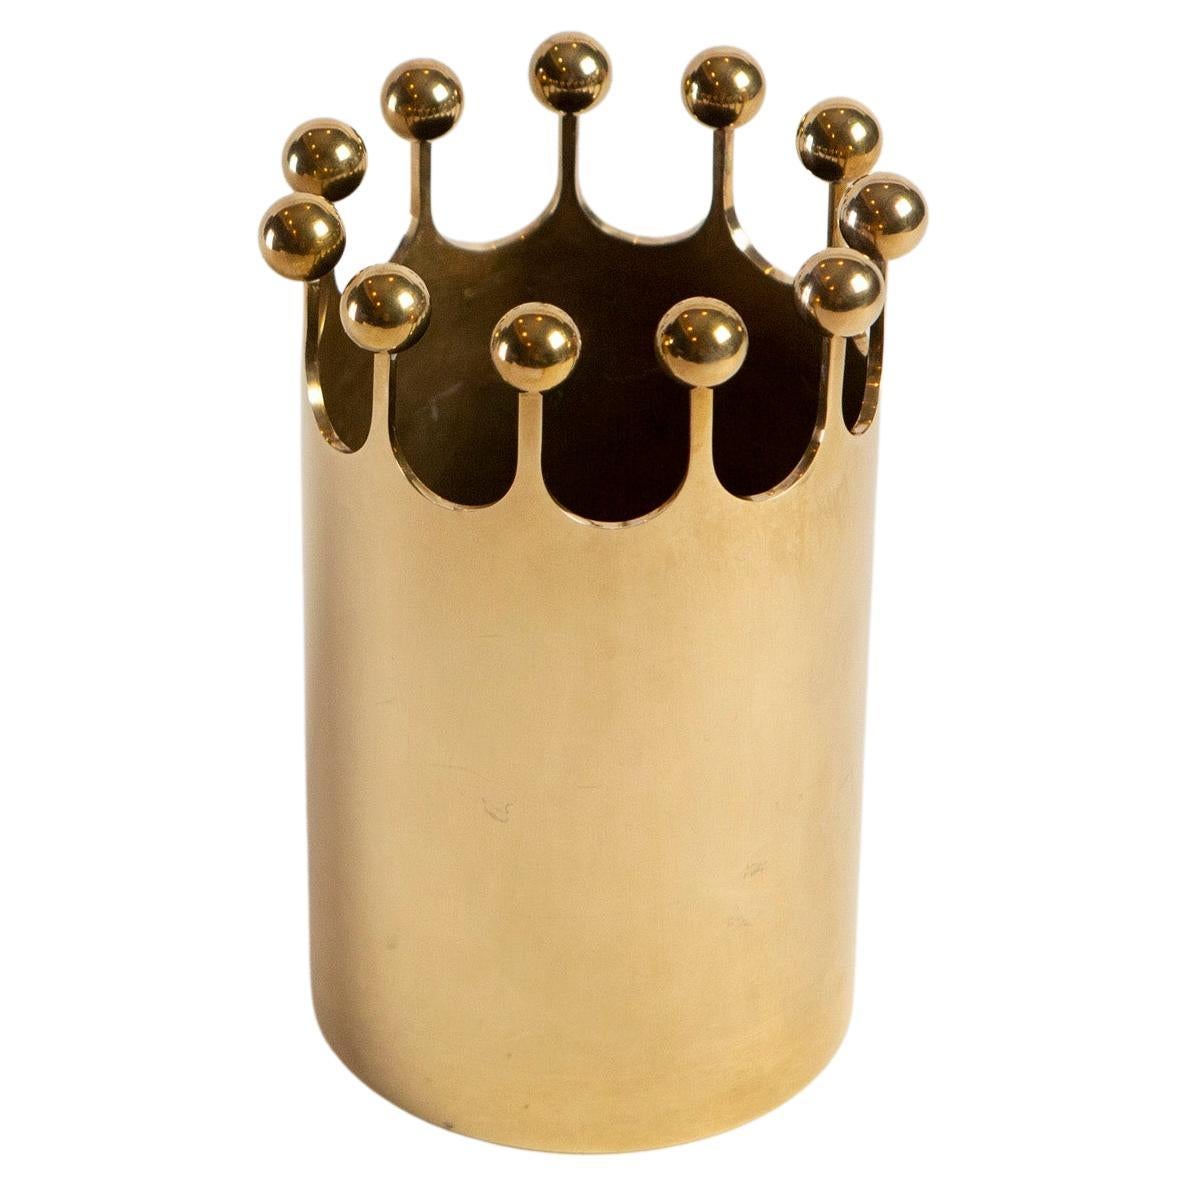 Pierre Forsell Solid Brass Vase, "11 Crown Points" for Skultuna, Sweden 1950s For Sale